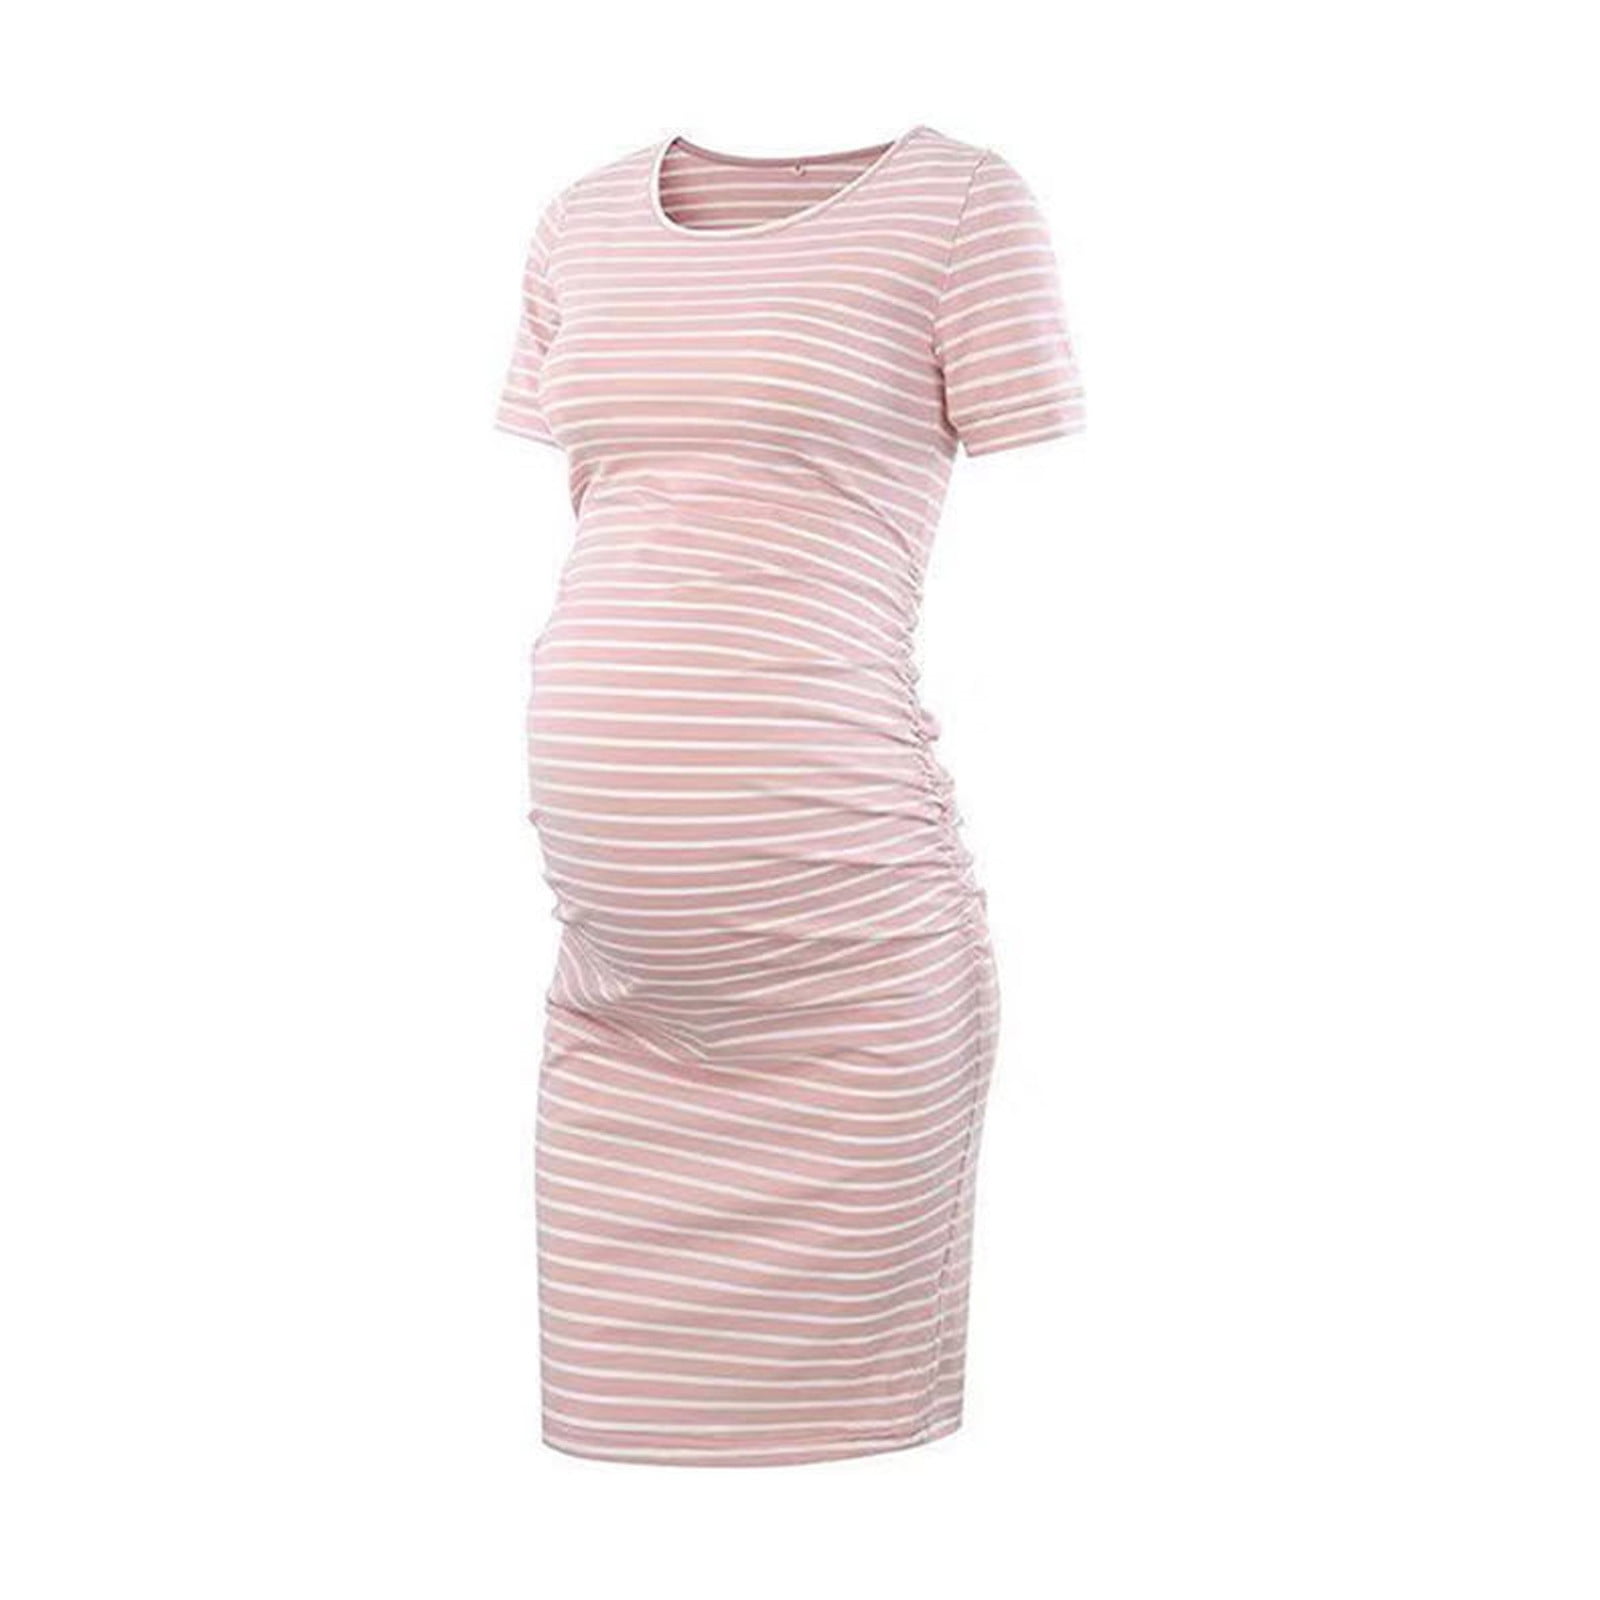 Frostluinai Maternity Dress For Photoshoot Summer Savings Clearances ...